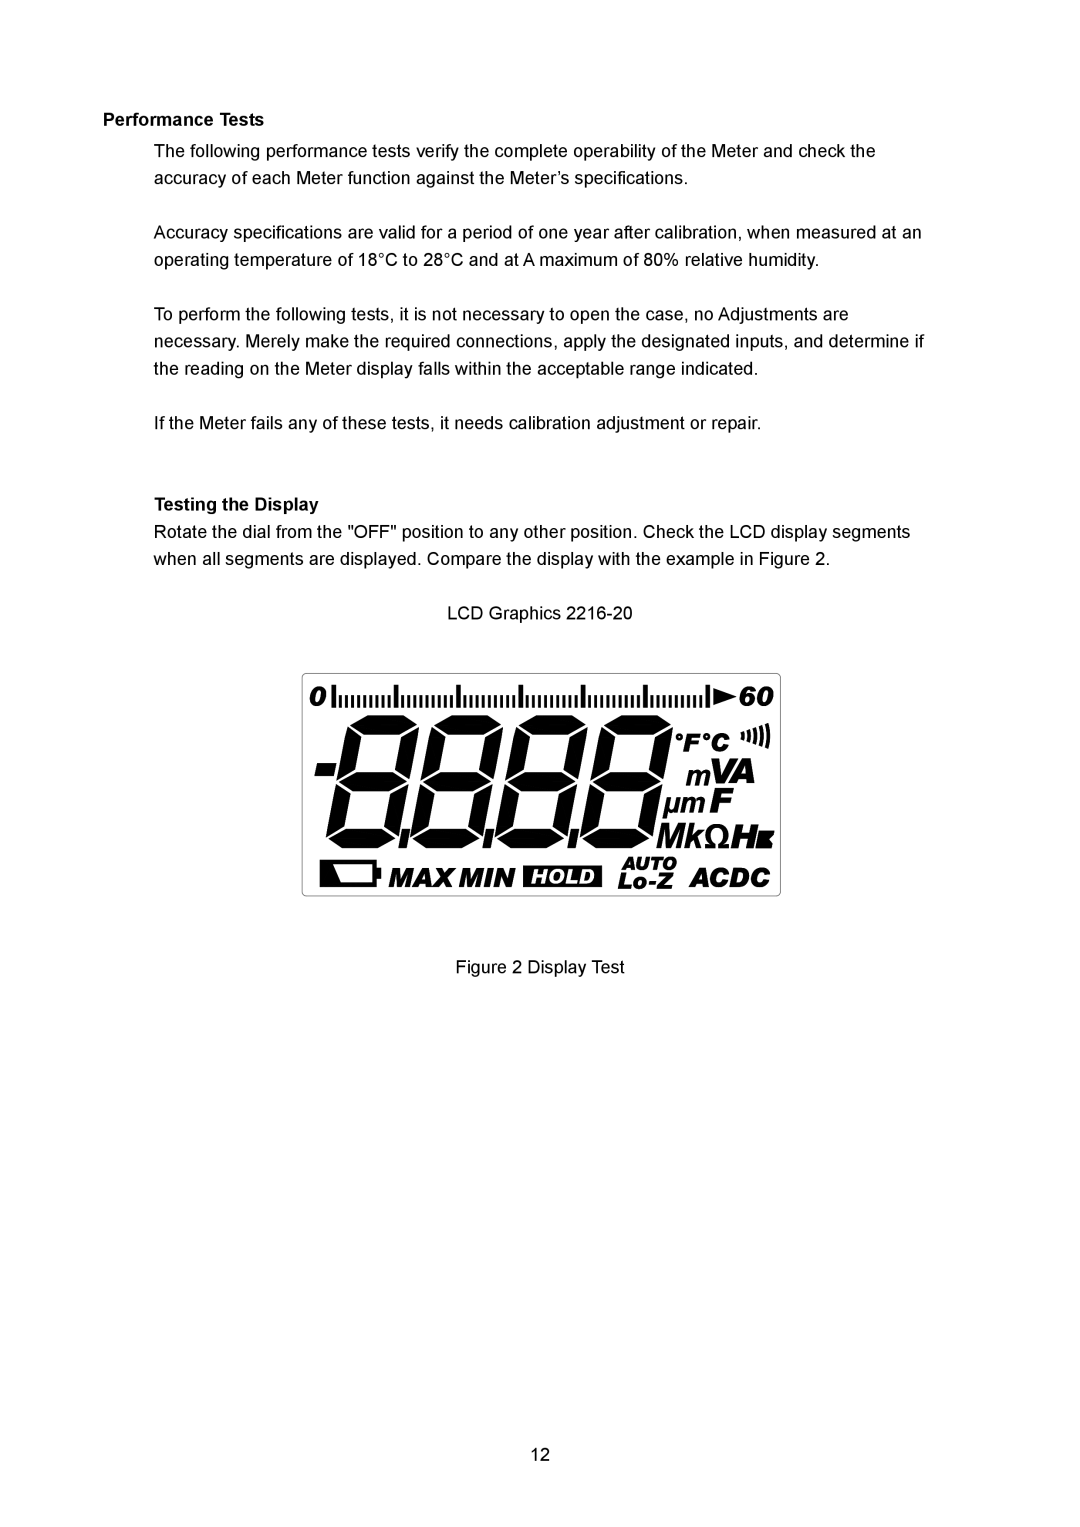 Milwaukee 2216-20 manual Performance Tests, Testing the Display 